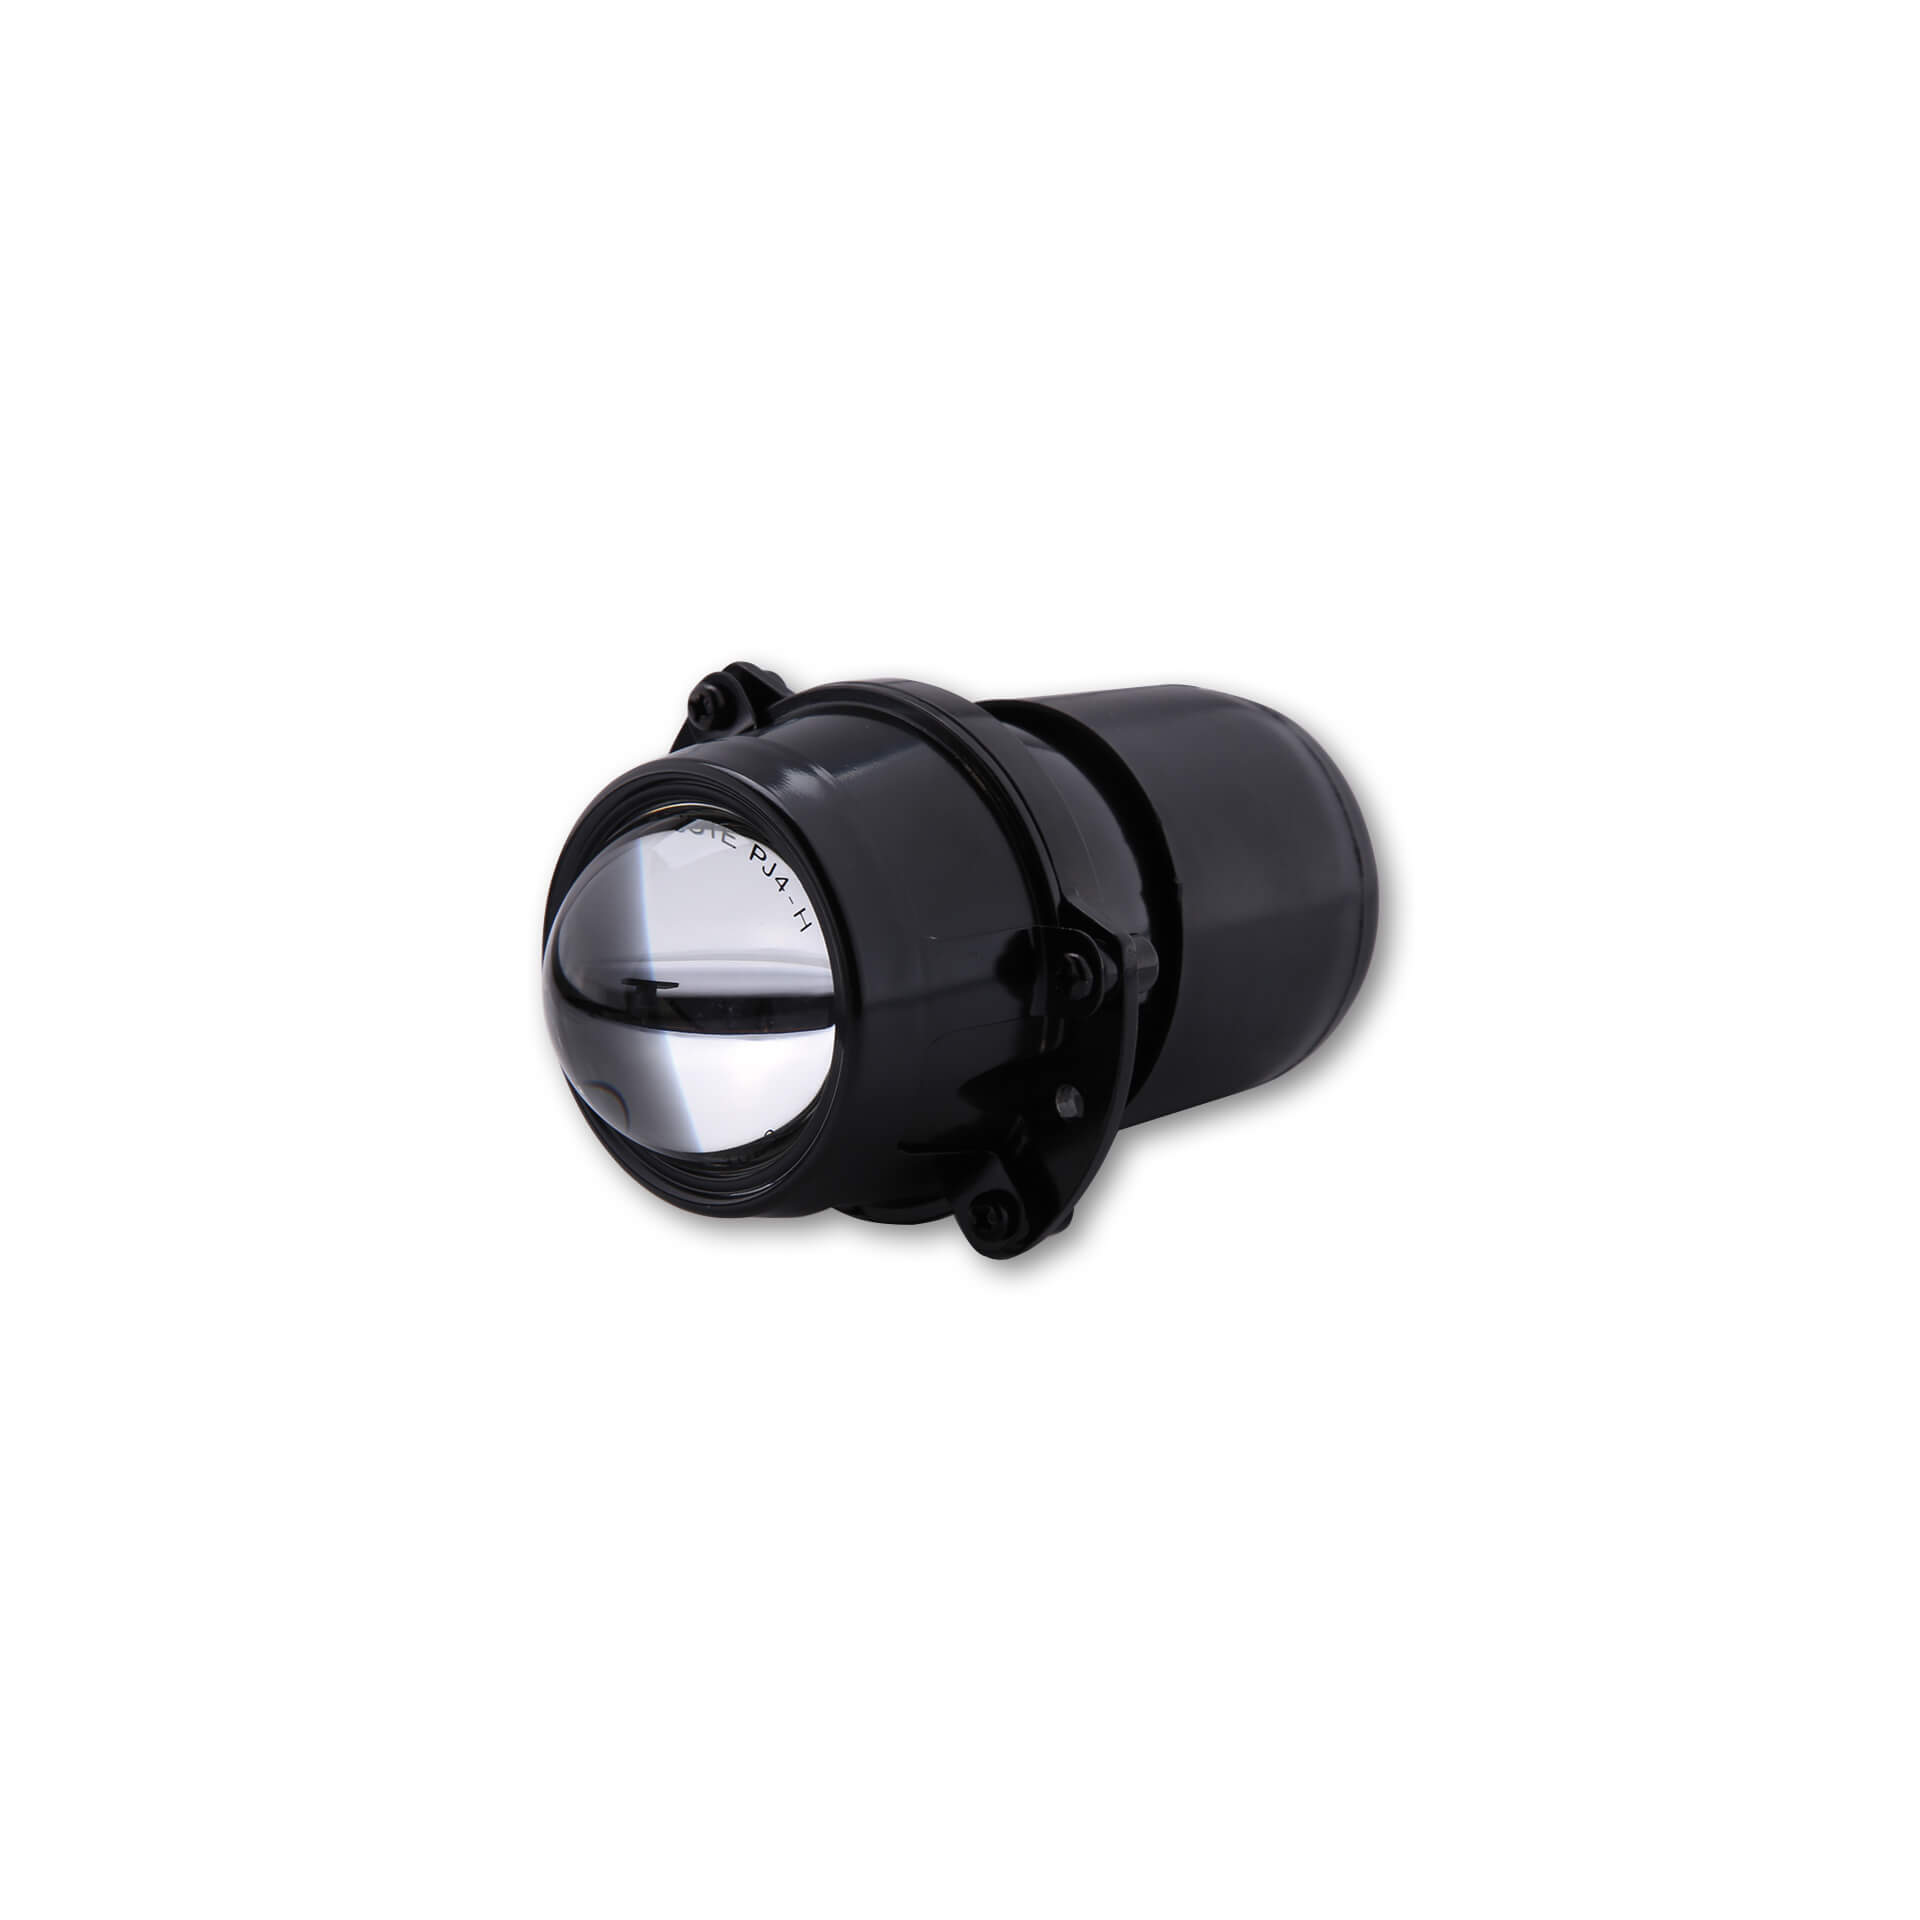 shin_yo 50 mm ellipsoid headlight with rubber cover, high beam, H1, 12V/55 Watt